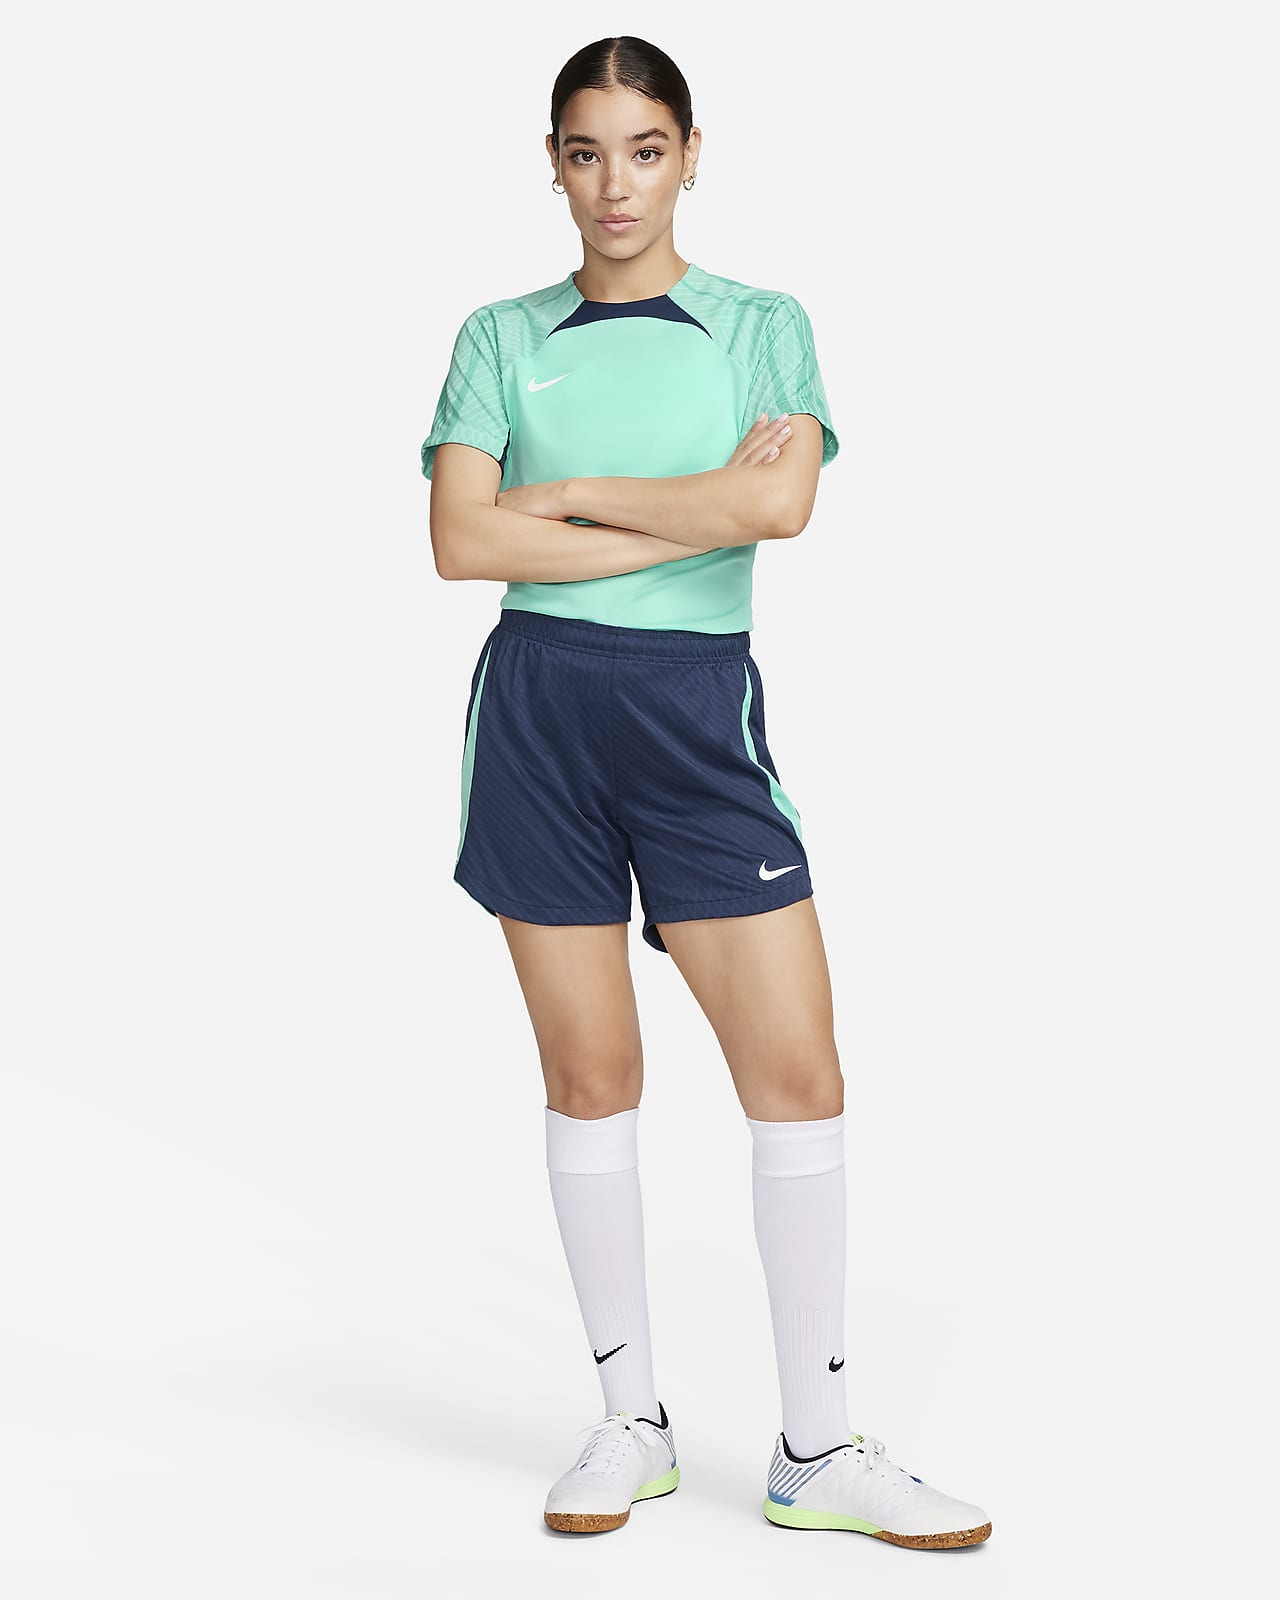 Nike Dri-FIT Strike Women's Soccer Shorts.